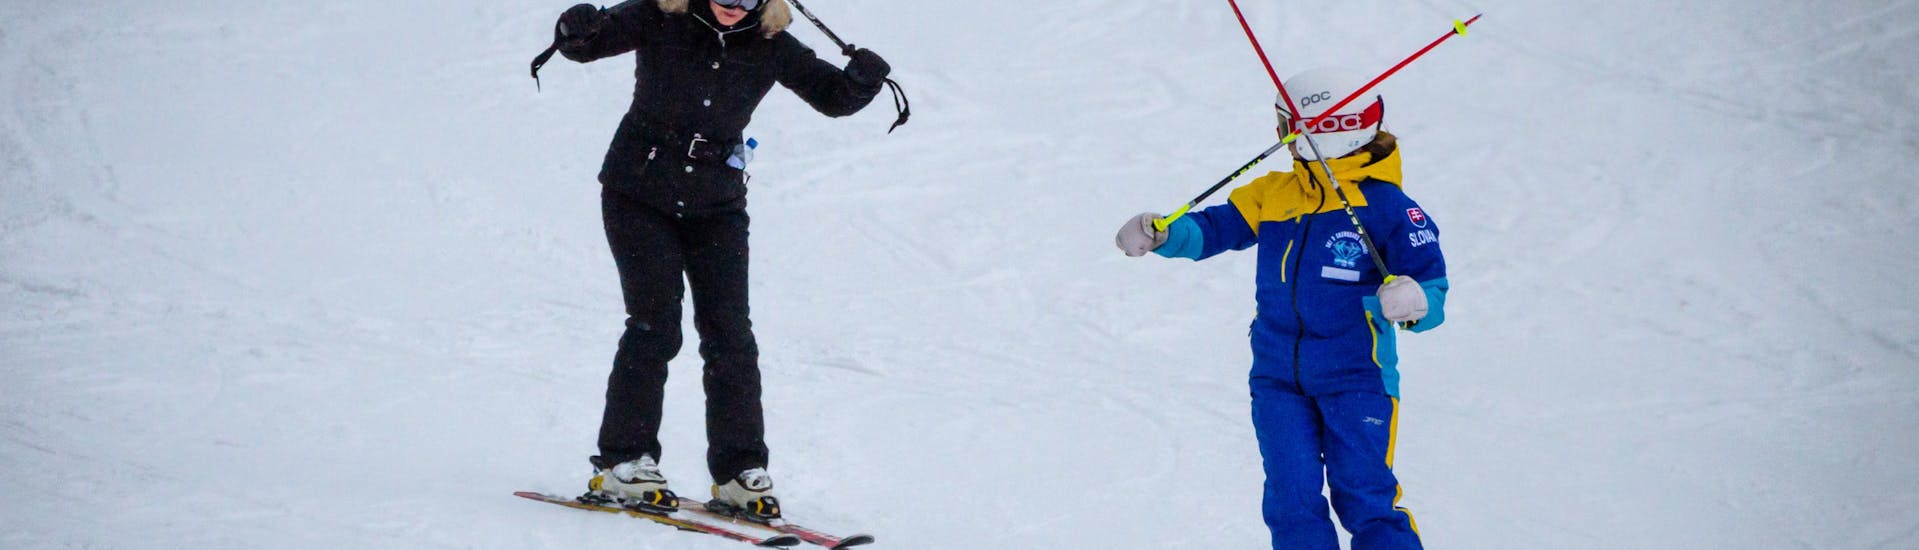 Privater Skikurs für Erwachsene aller Levels mit Crystal Ski  Demänovská Dolina.